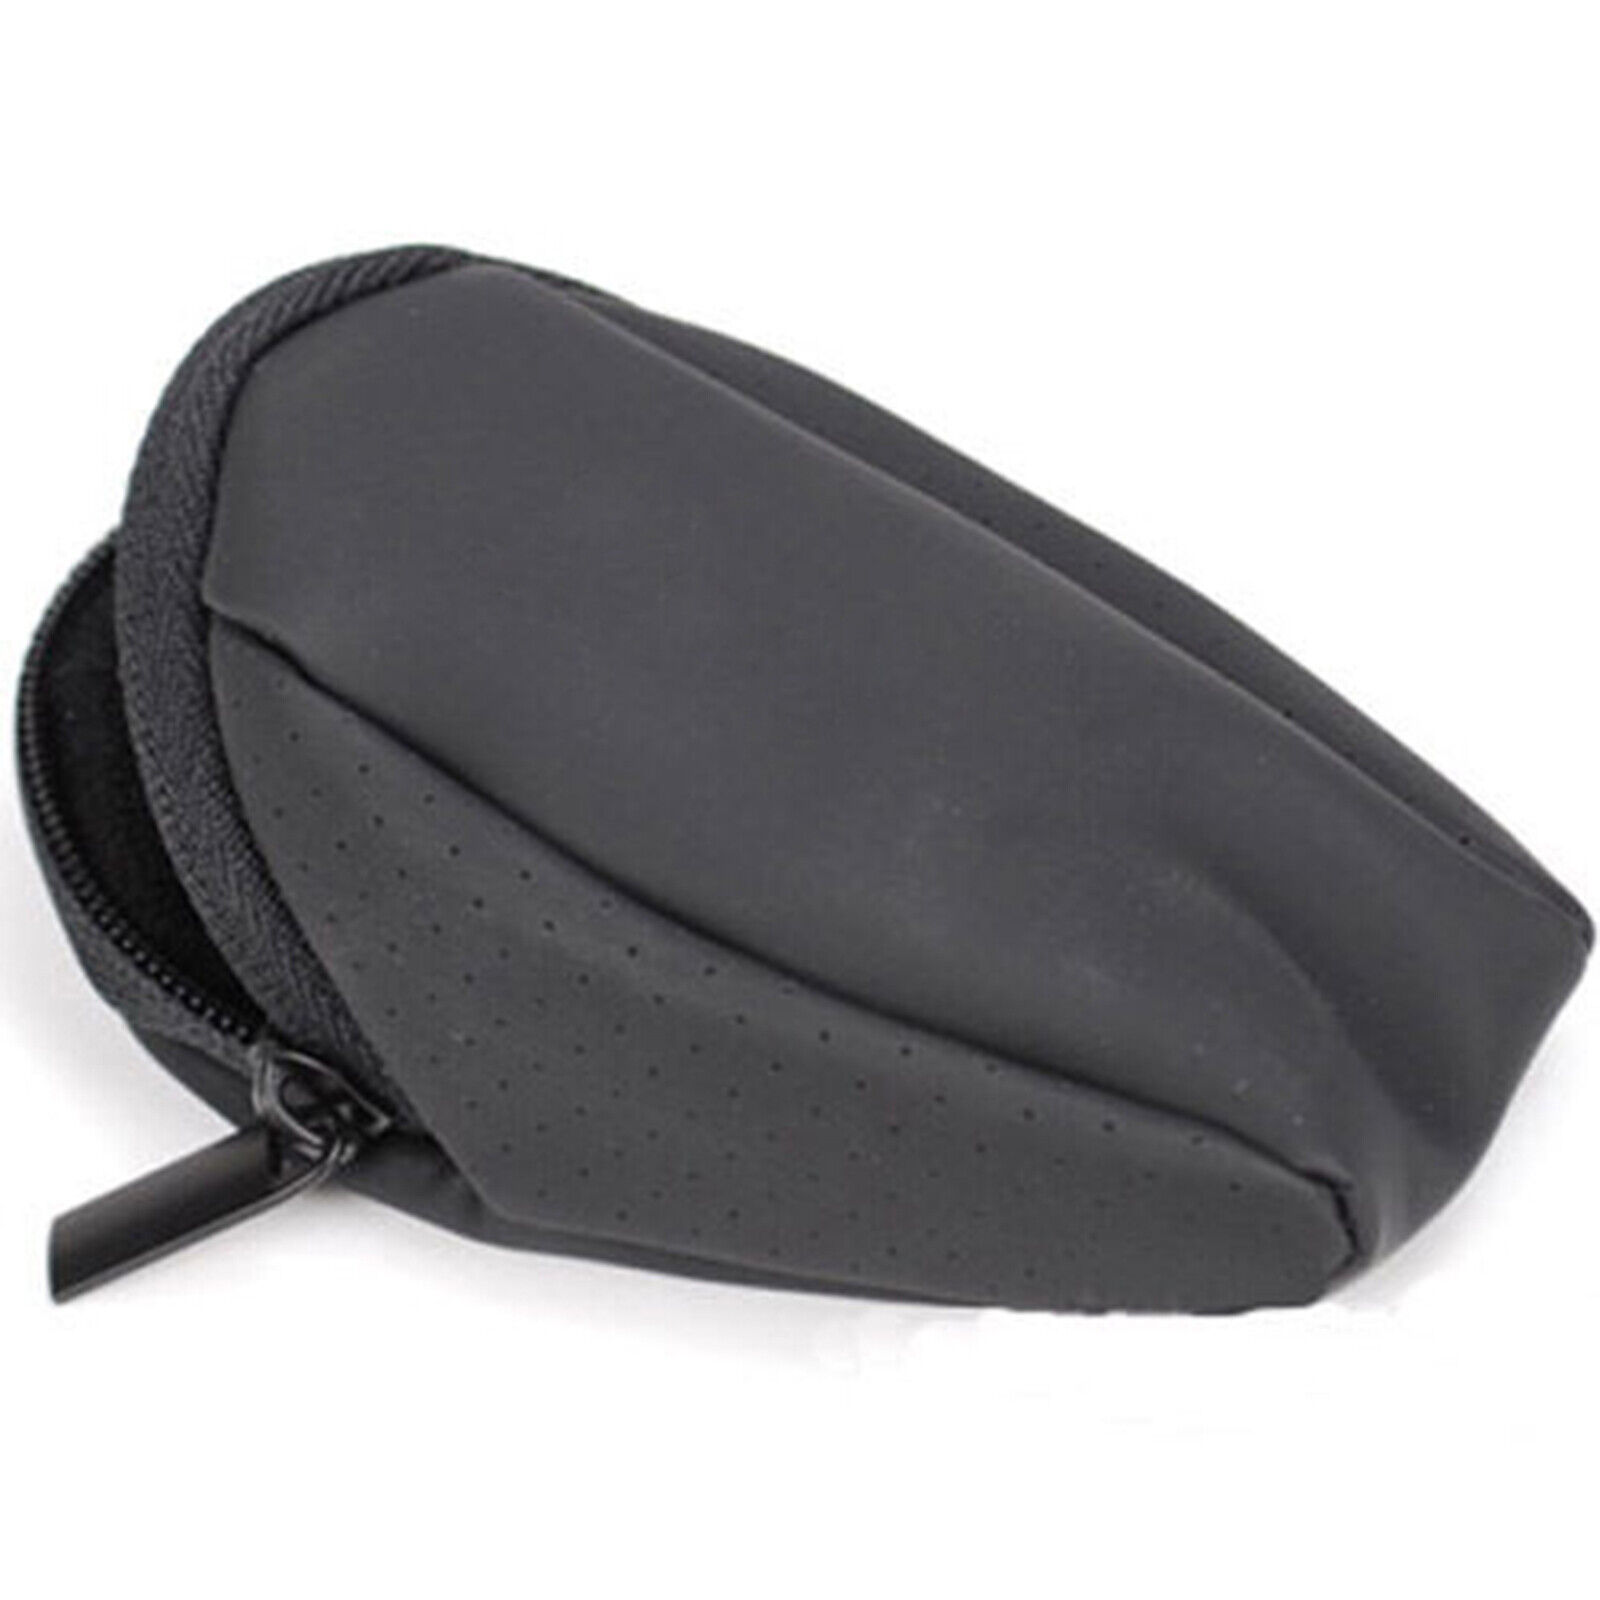 Mouse Bag Cover Zipper Pouch for Logitech M905 M325 M235 M305 M215 V470 V550